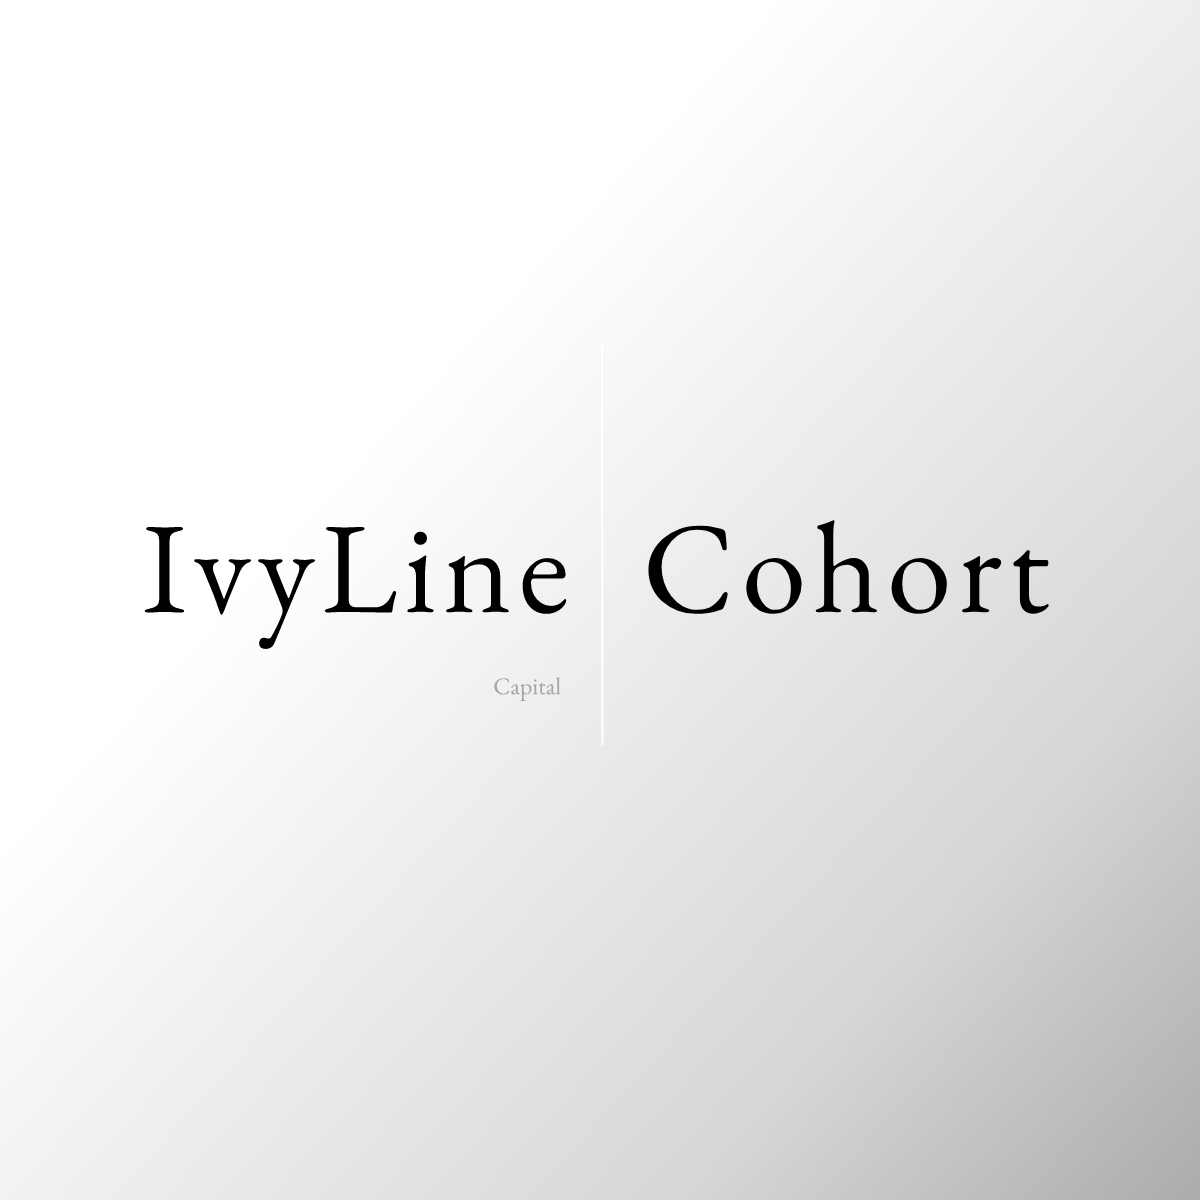 ivyline capital cohorts